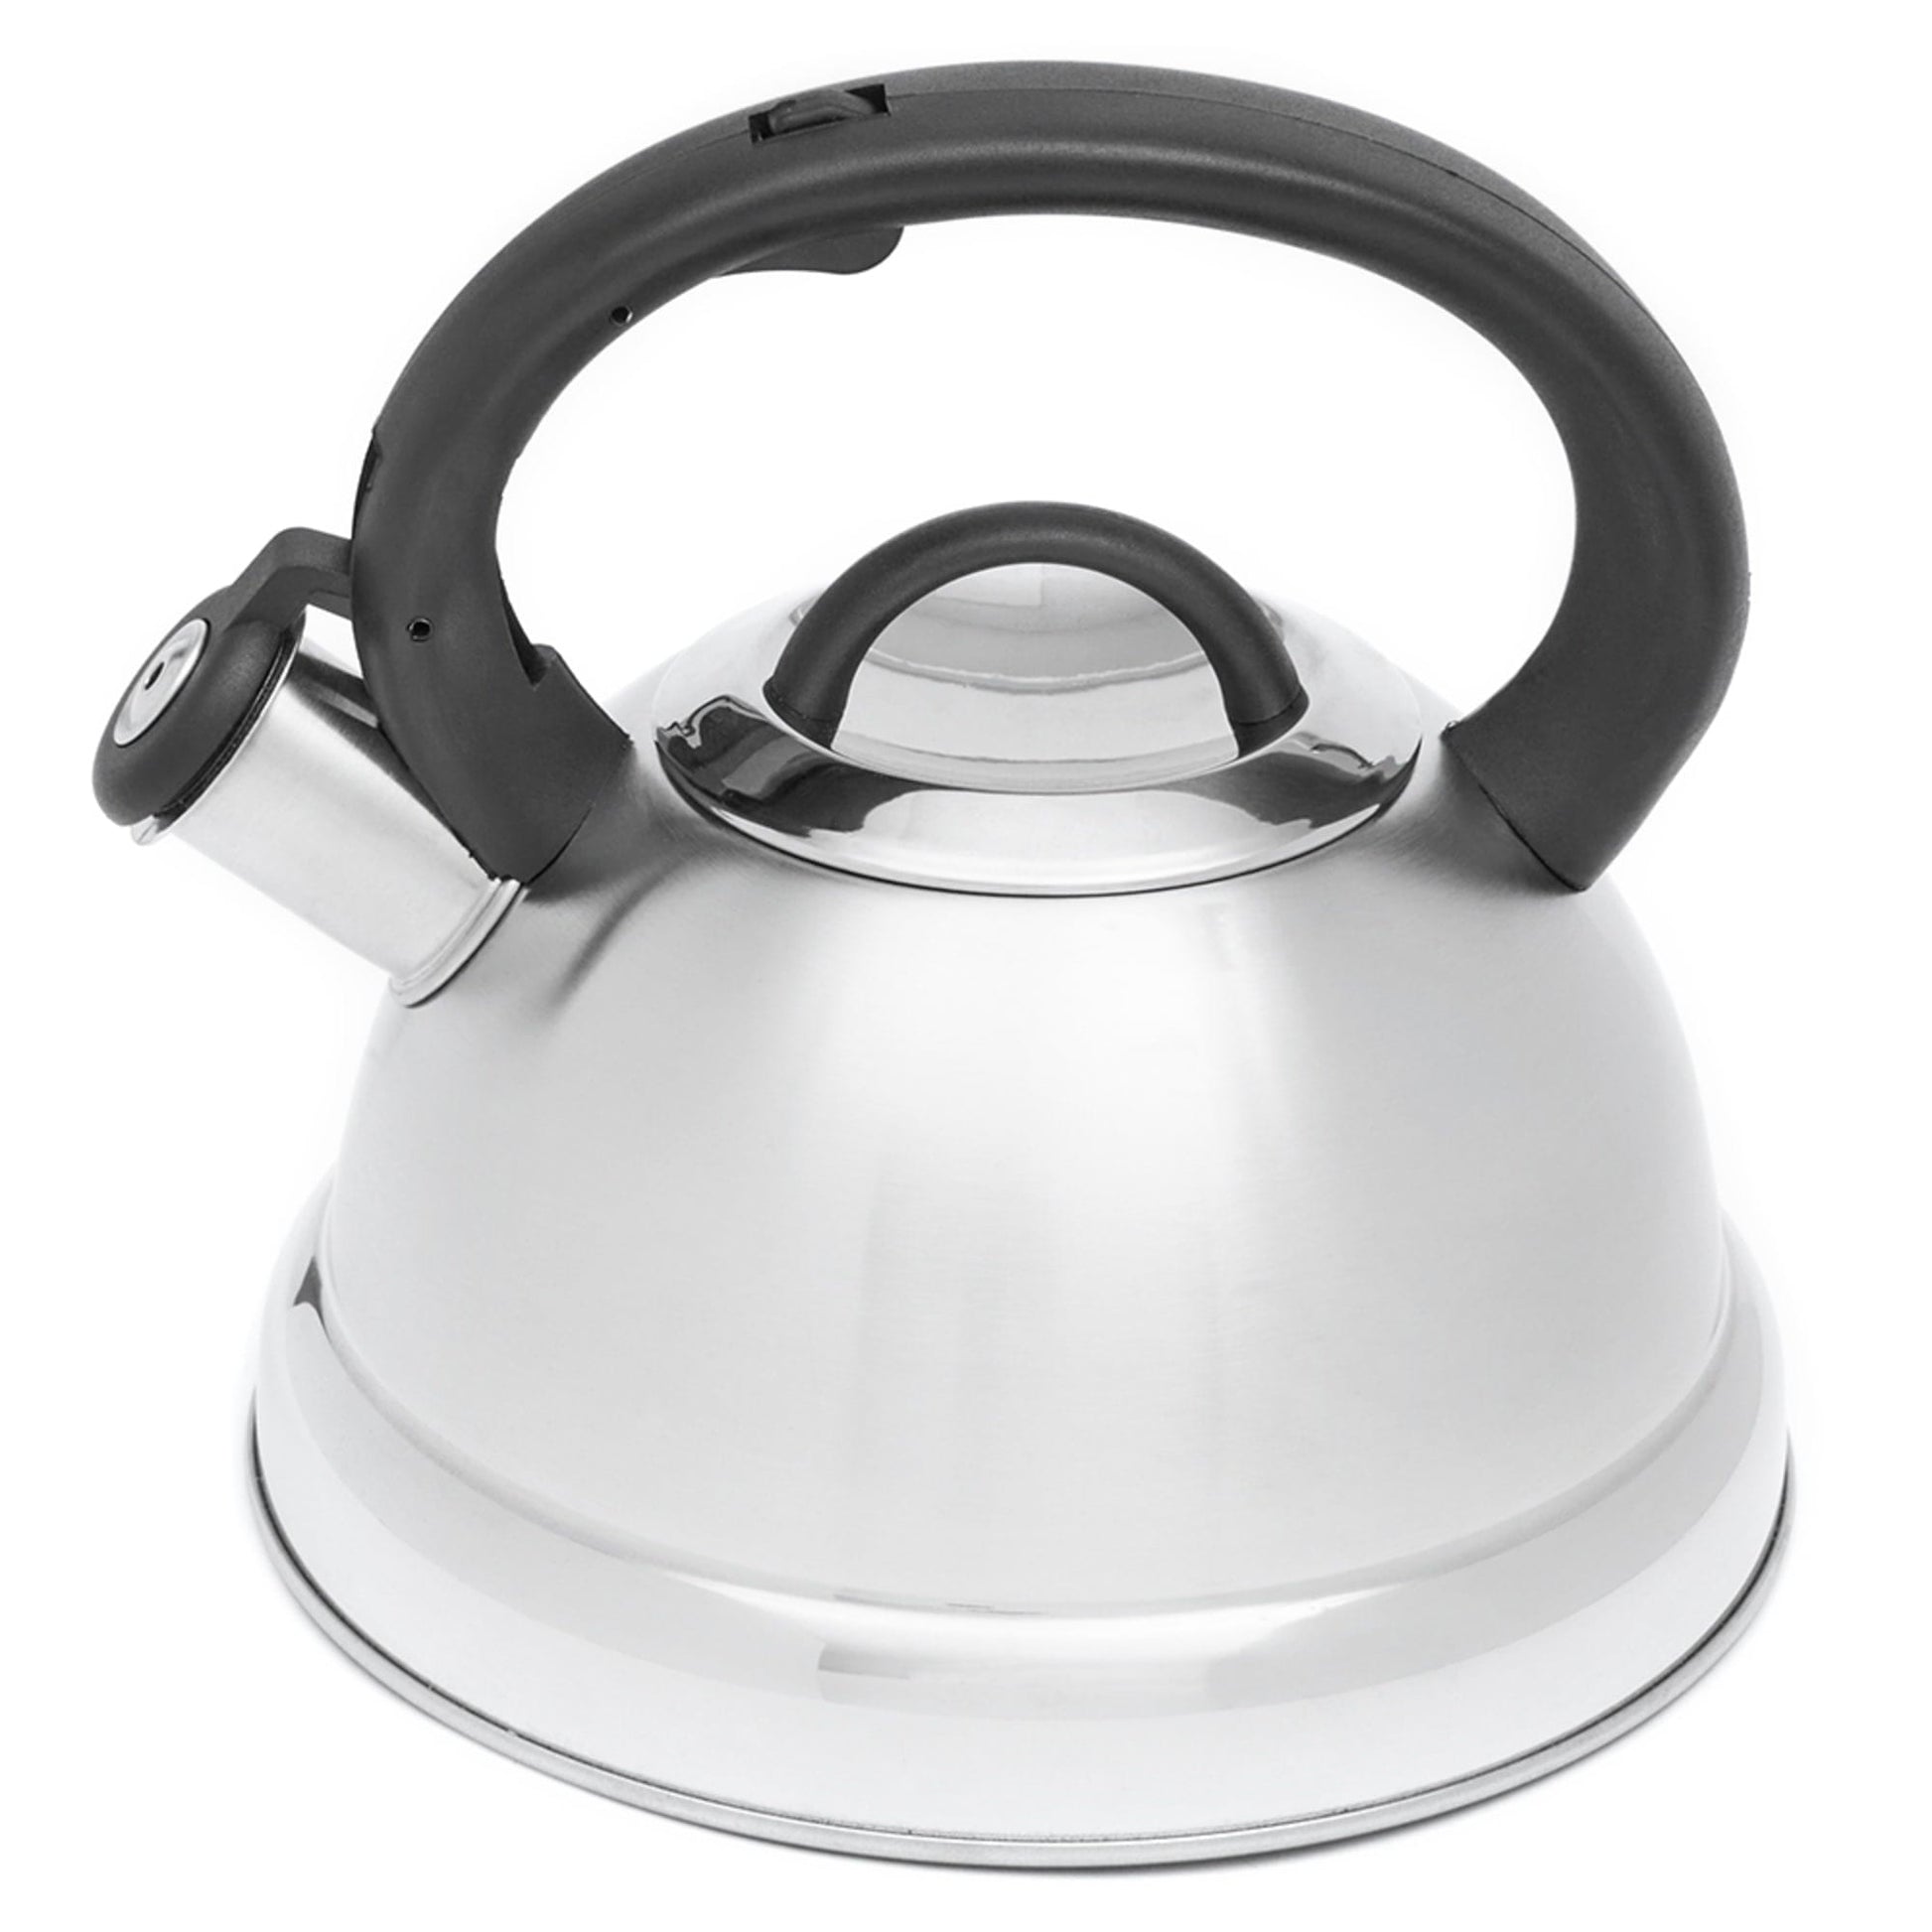 Tohsssik A2.5 Whistling Tea Kettle Stainless Steel Teapot, 2.5